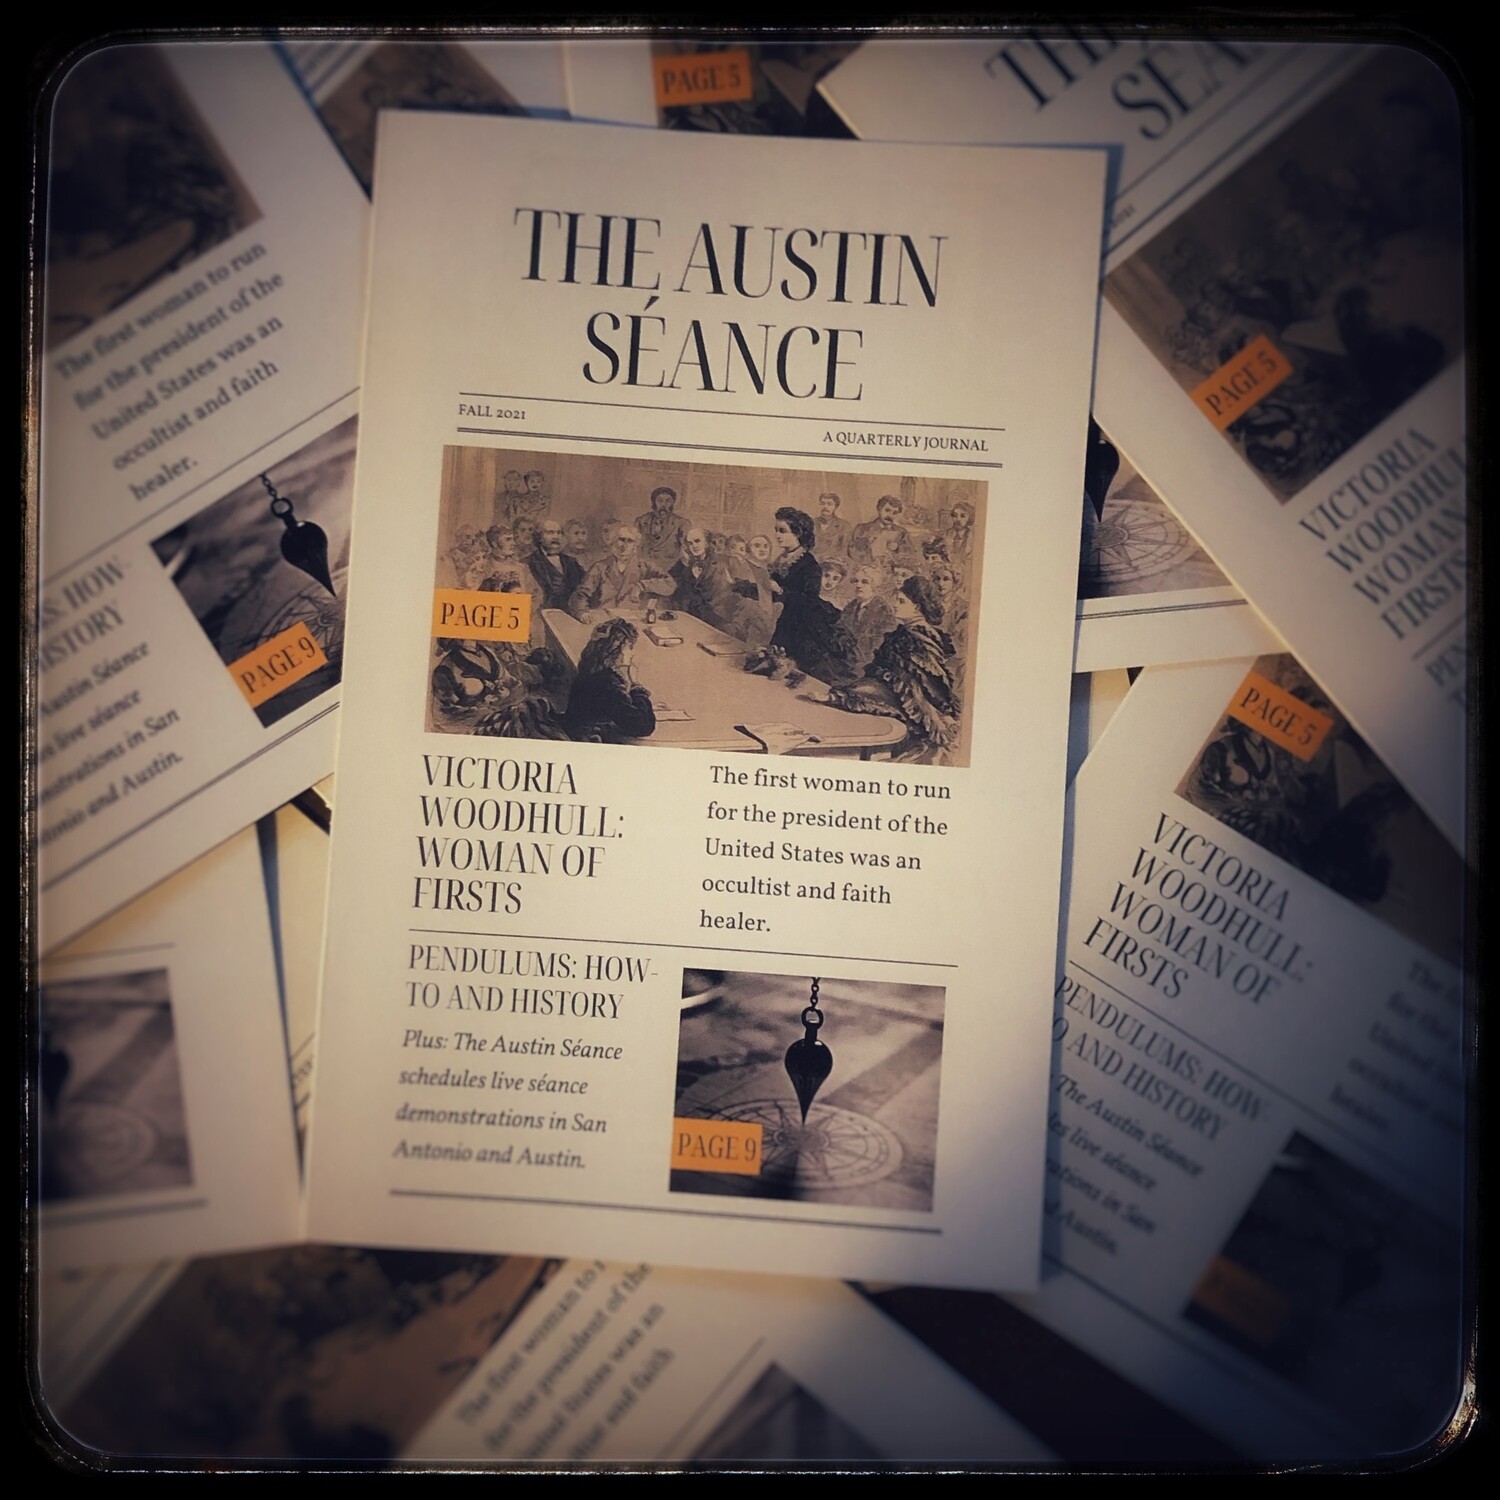 The Austin Séance Quarterly Journal